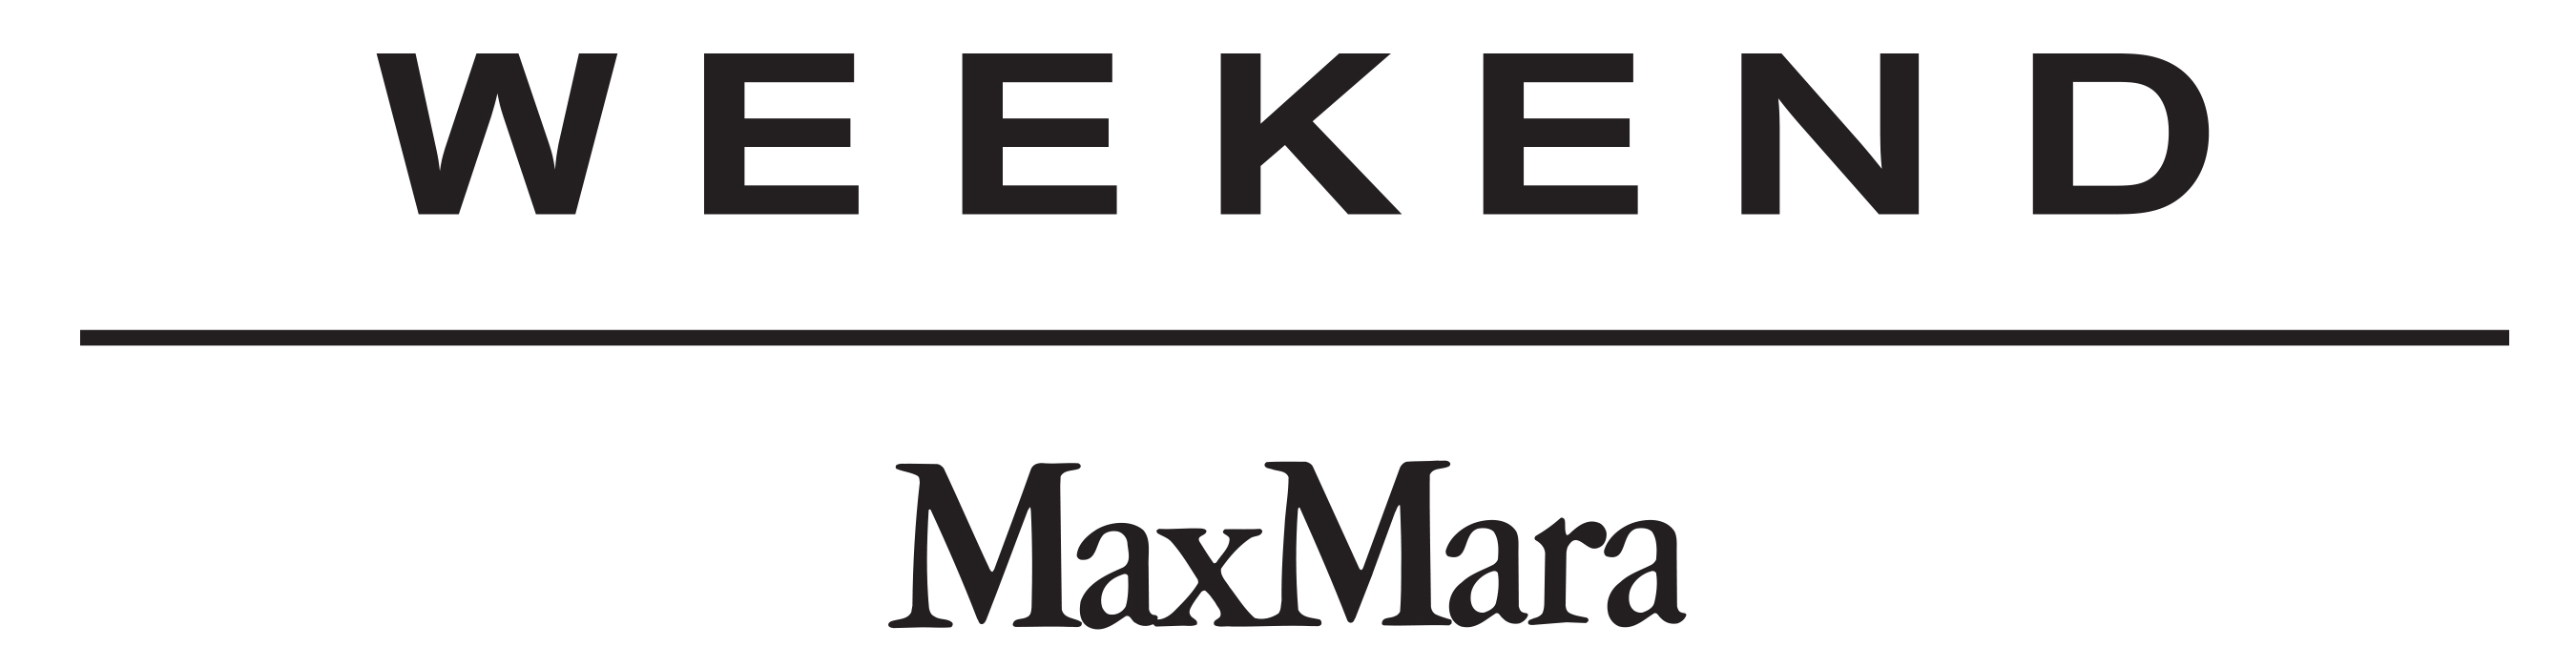 Weekend Max Mara – Logos Download